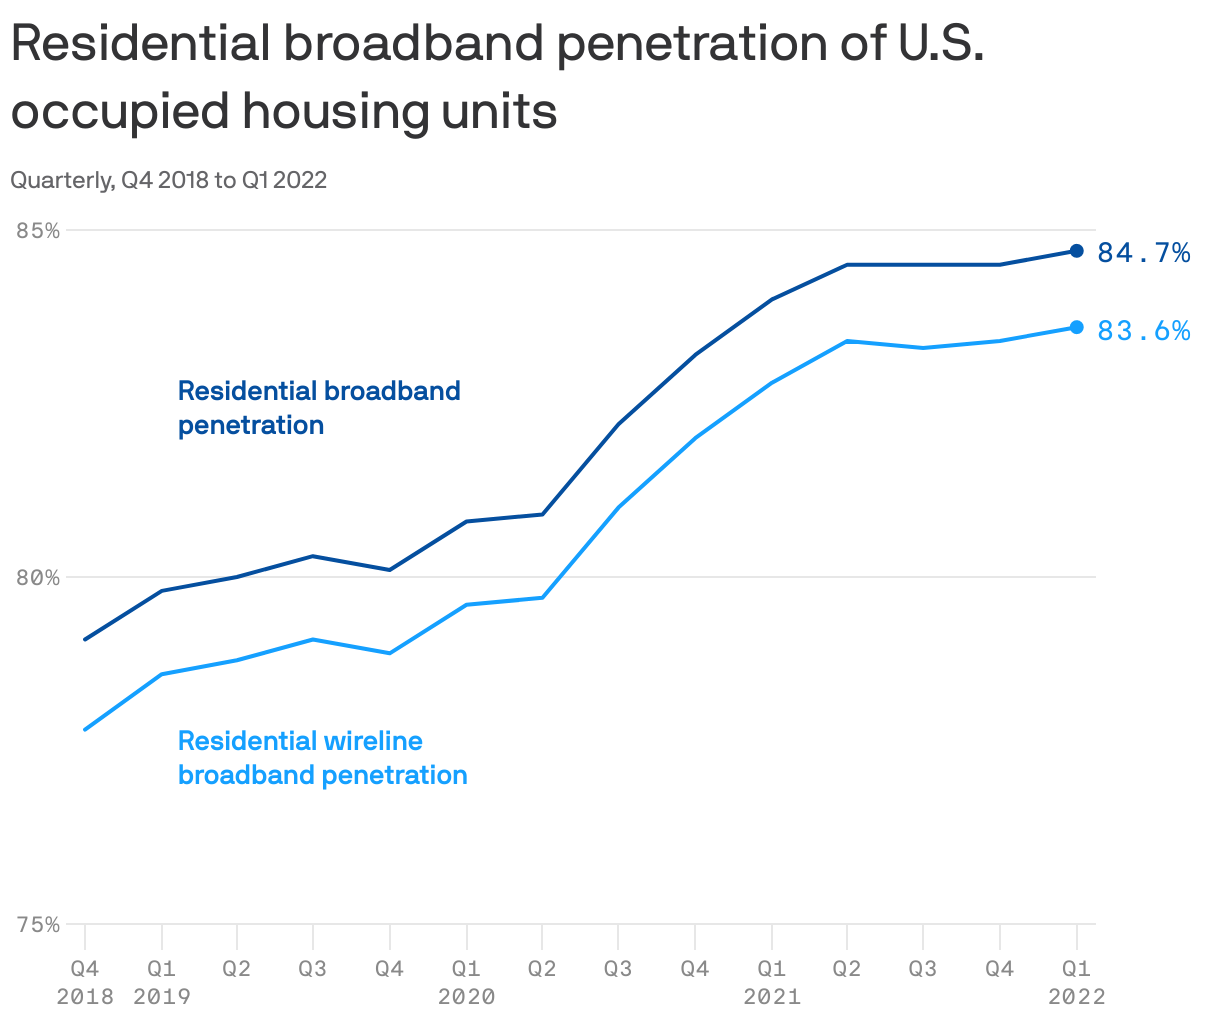 Residential broadband penetration of U.S. occupied housing units